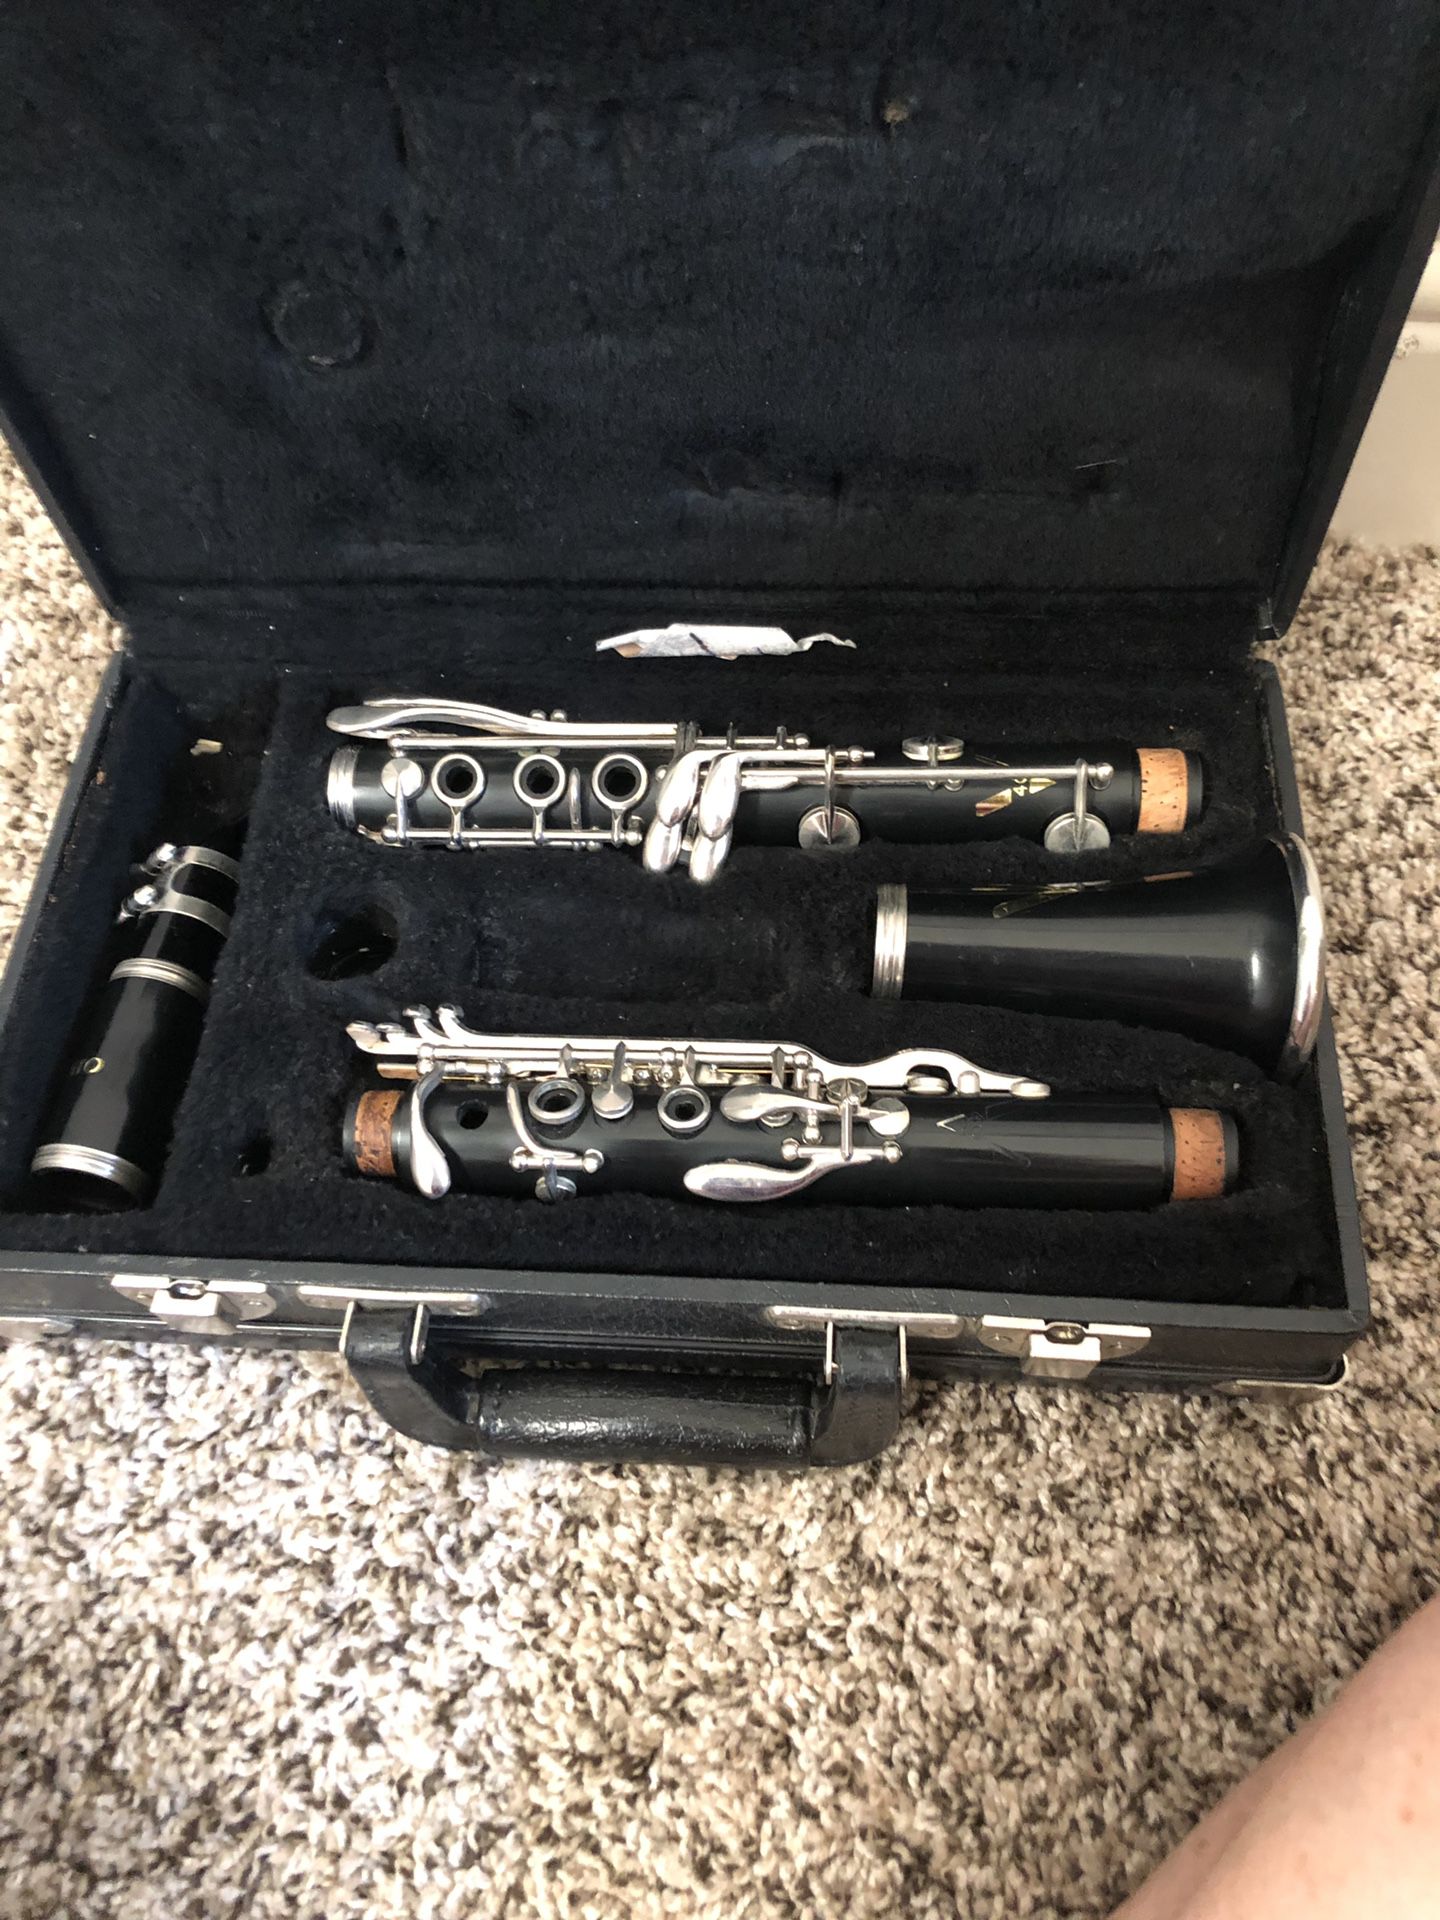 Used Vito wood clarinet $60